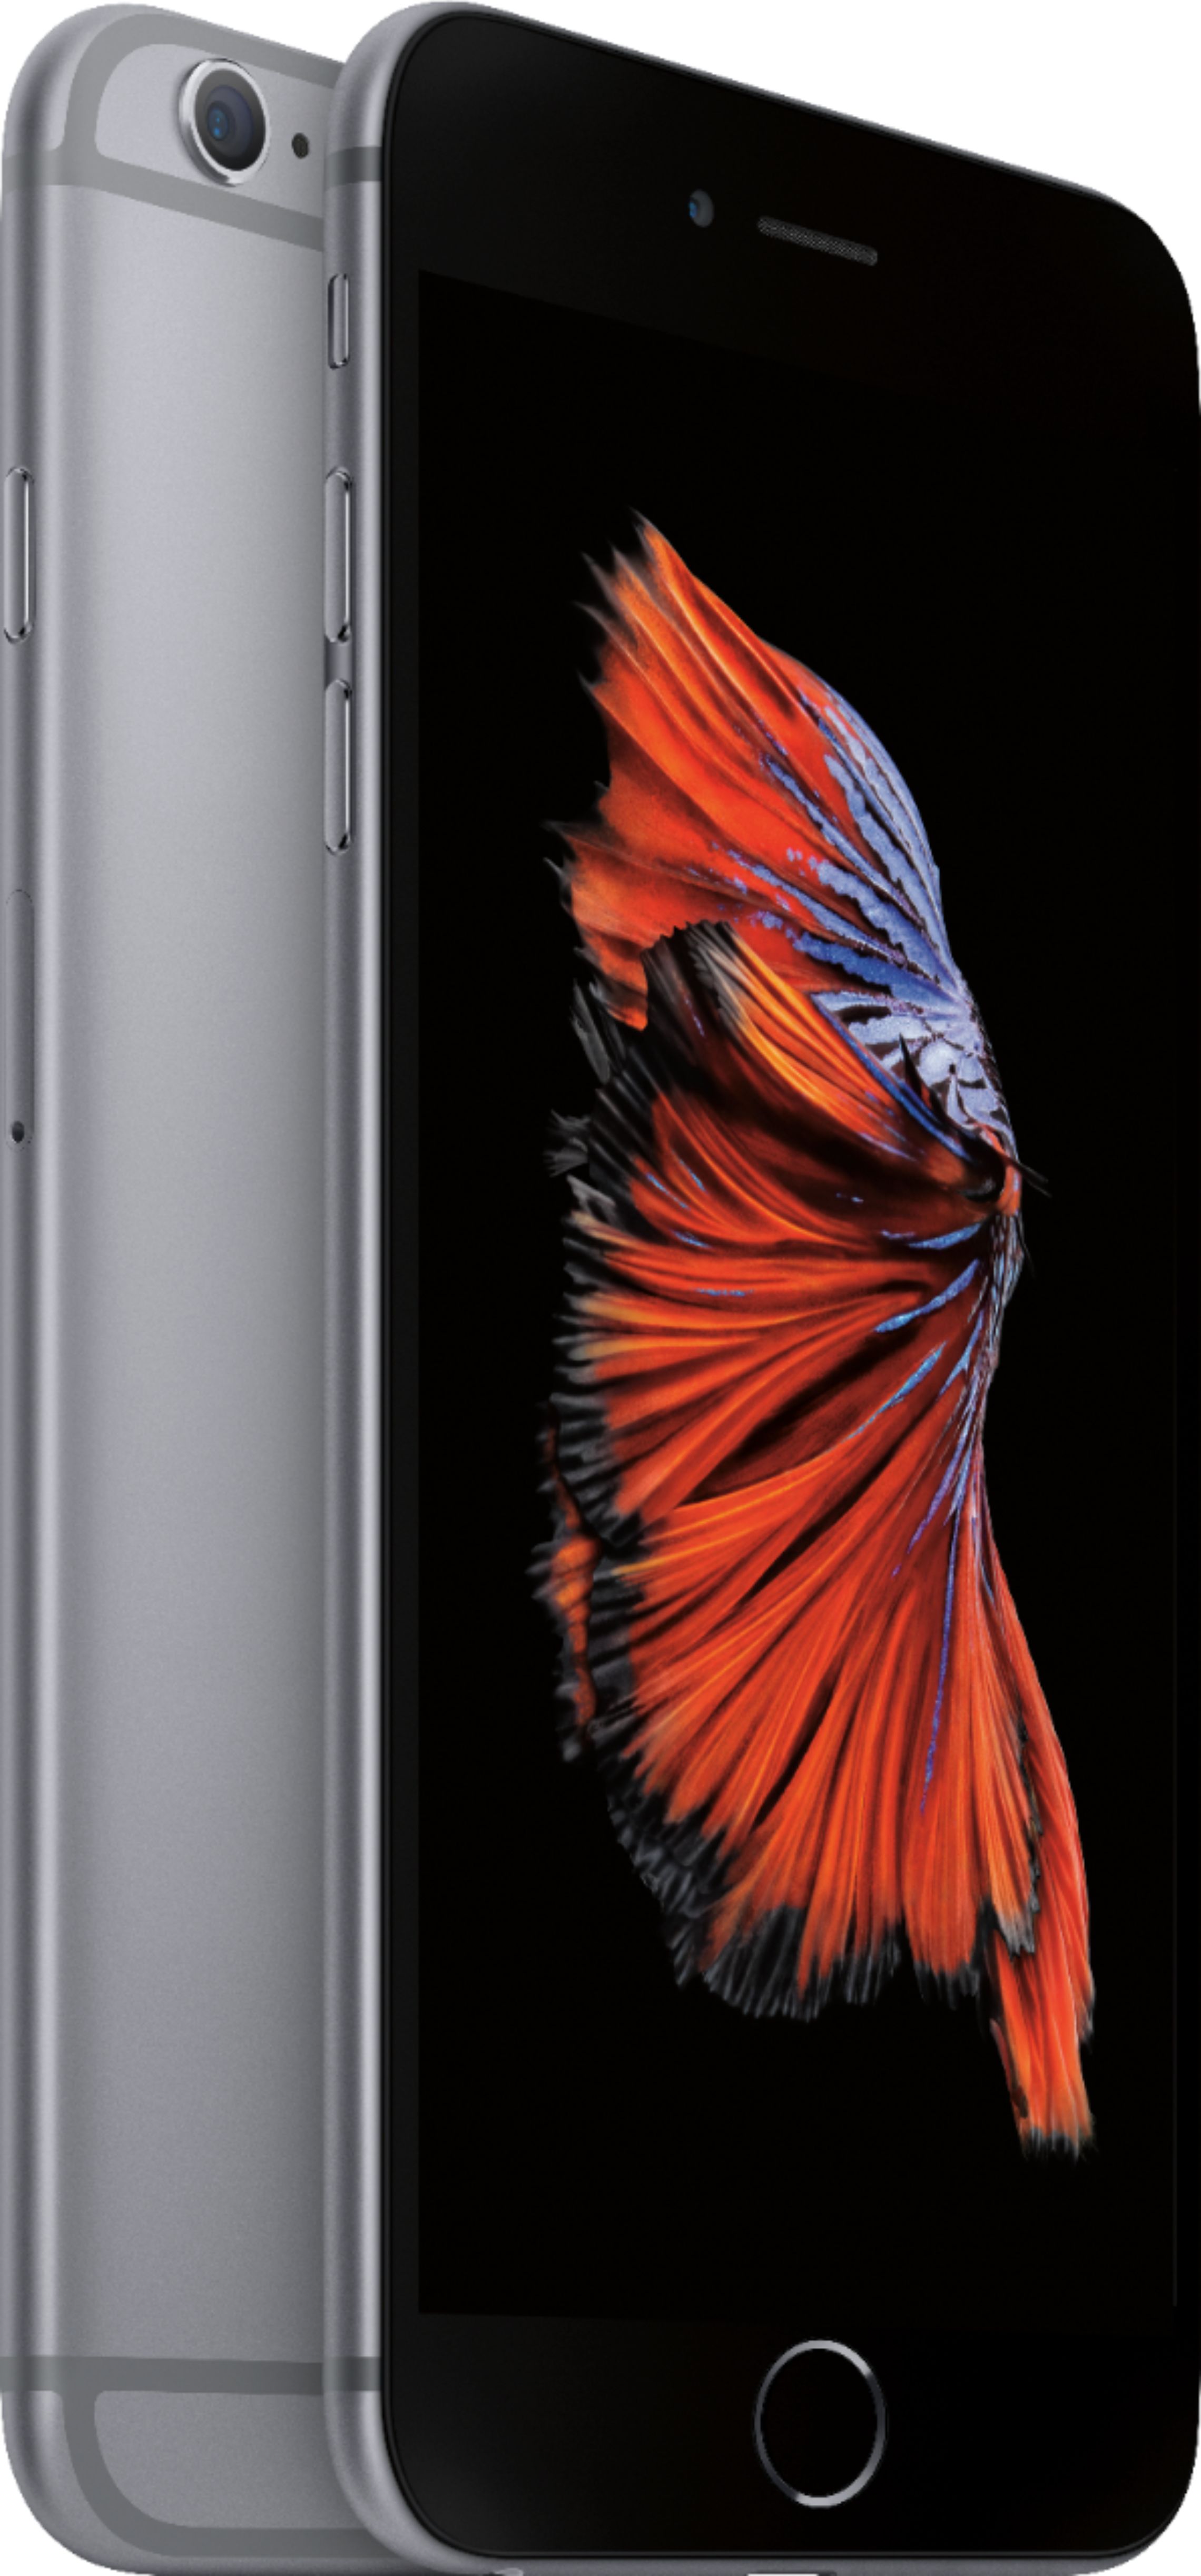 Best Buy Verizon Prepaid Apple Iphone 6s With 32gb Memory Prepaid Cell Phone Space Gray Mrpr2ll A